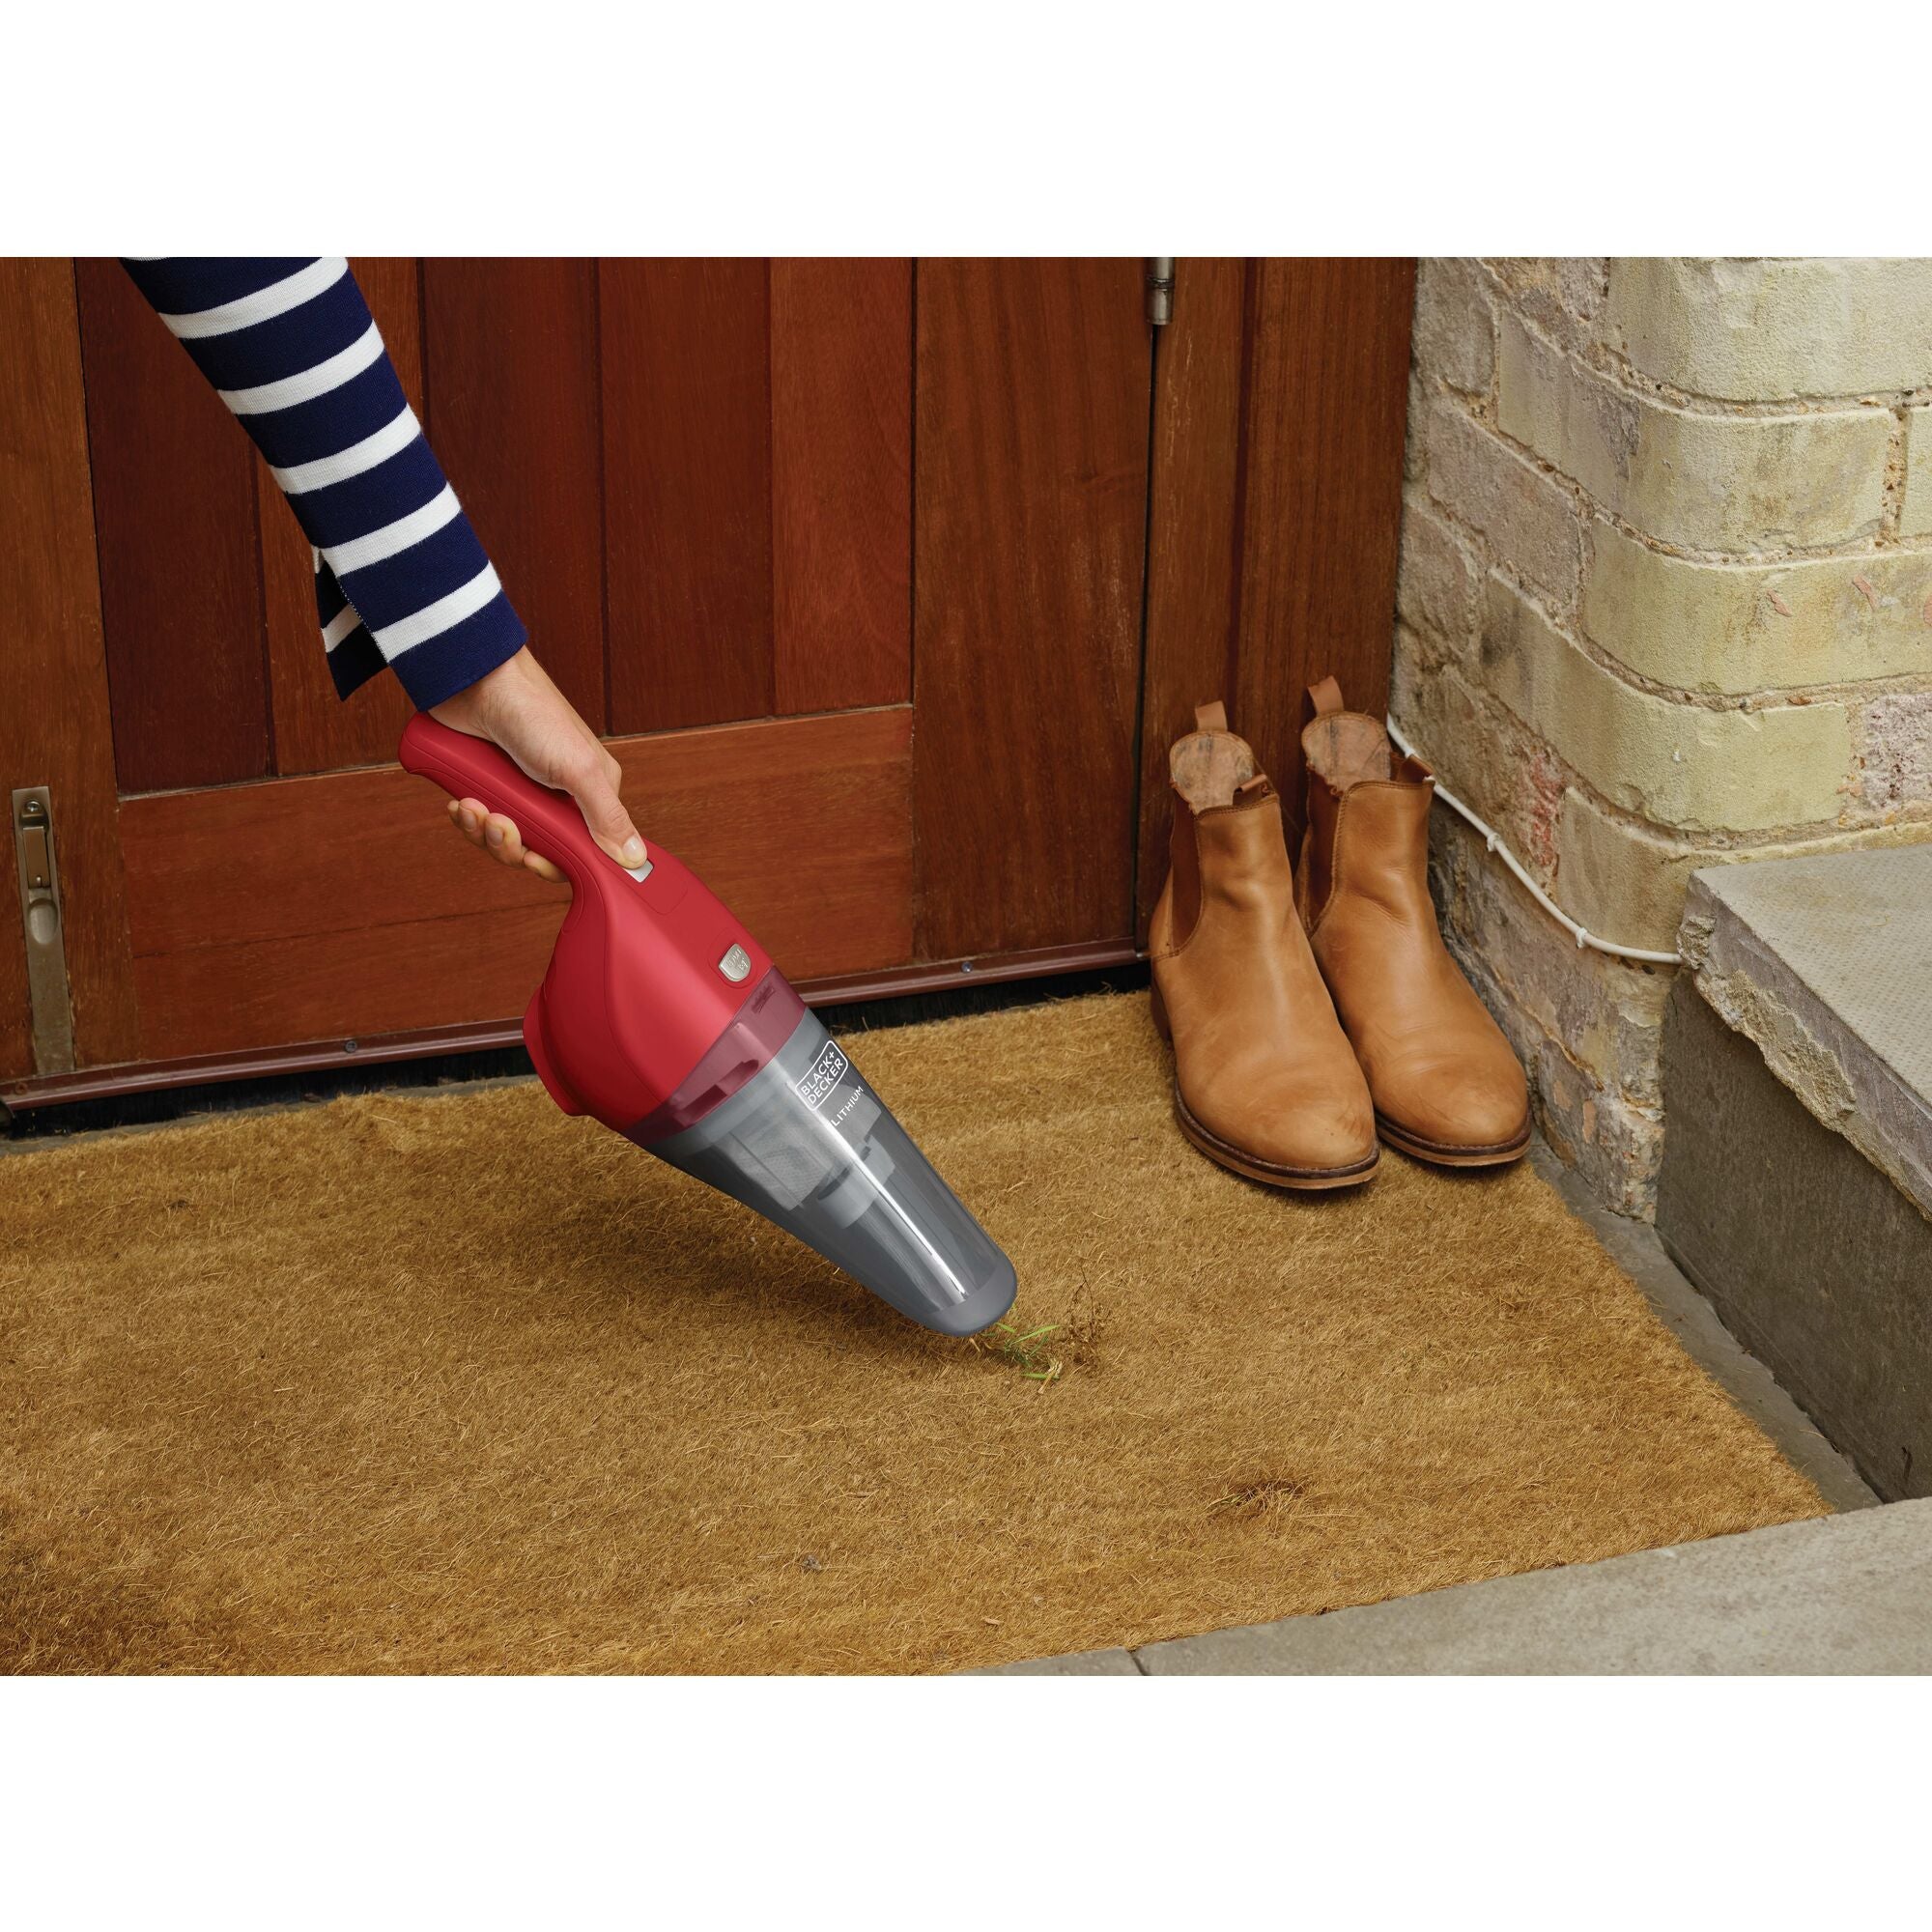 Handheld Vacuum Cordless being used to clean dirt from door mat.